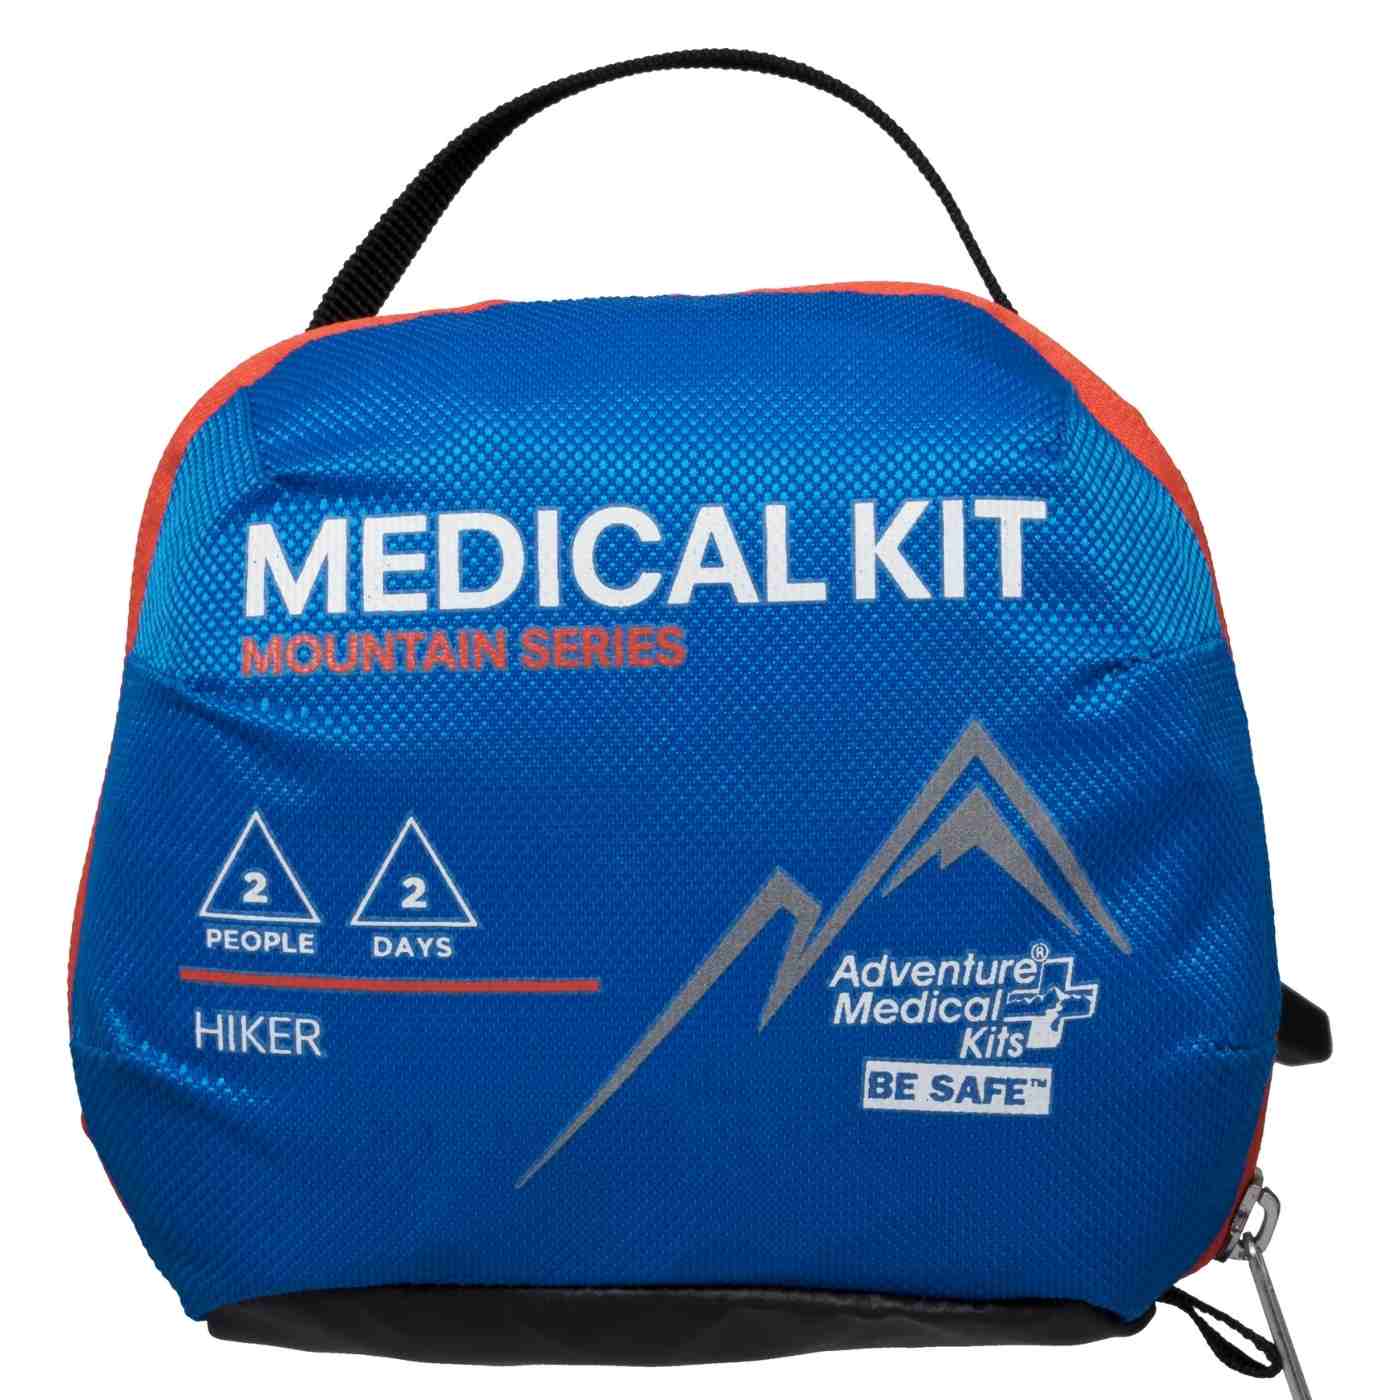 Mountain Series Medical Kit - Hiker front